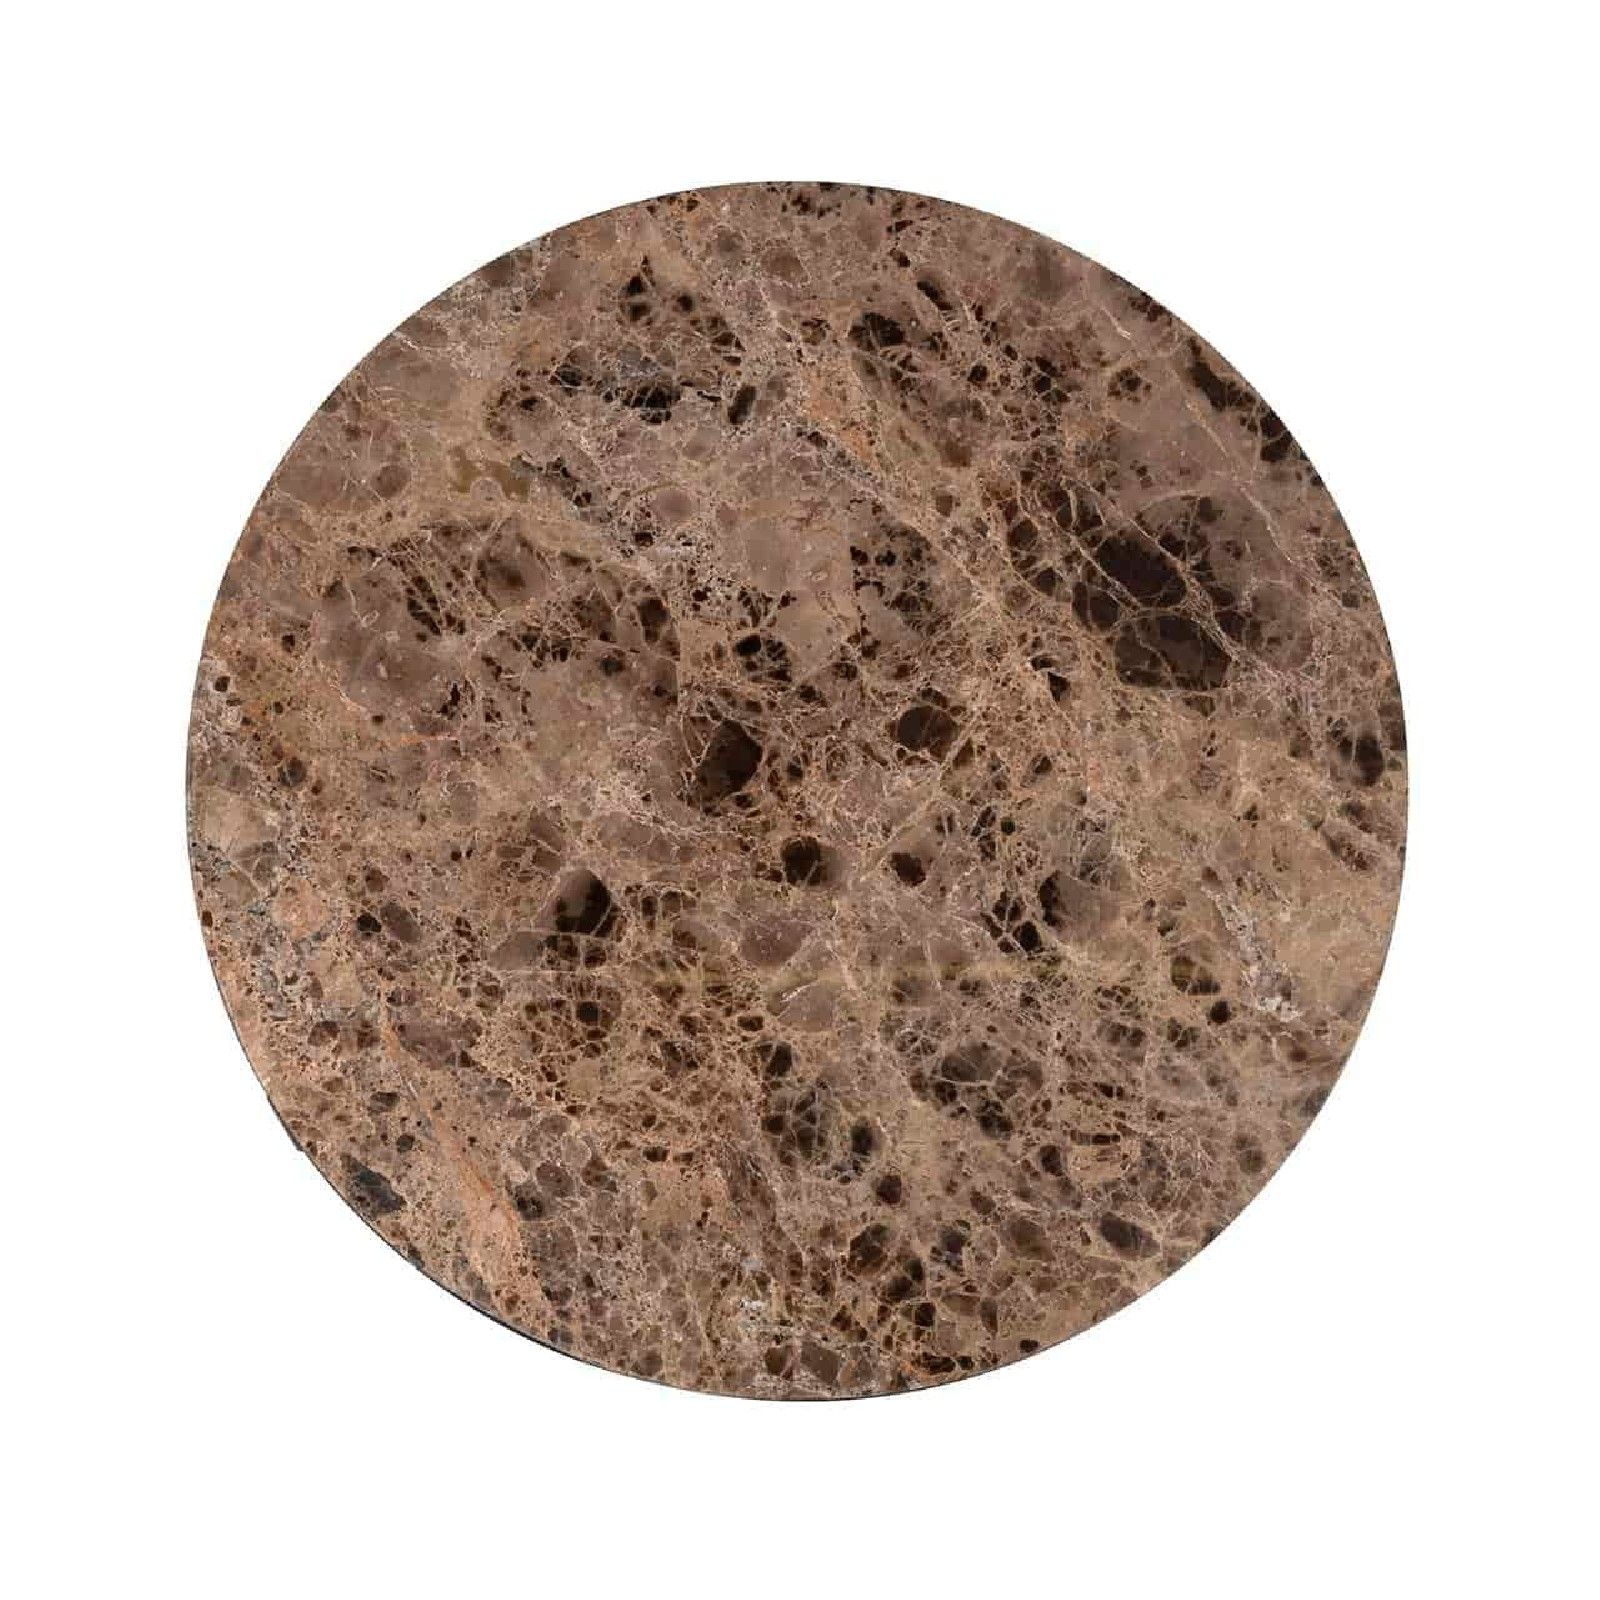 Table basse ronde 60Ø - Metal et marbre brun 